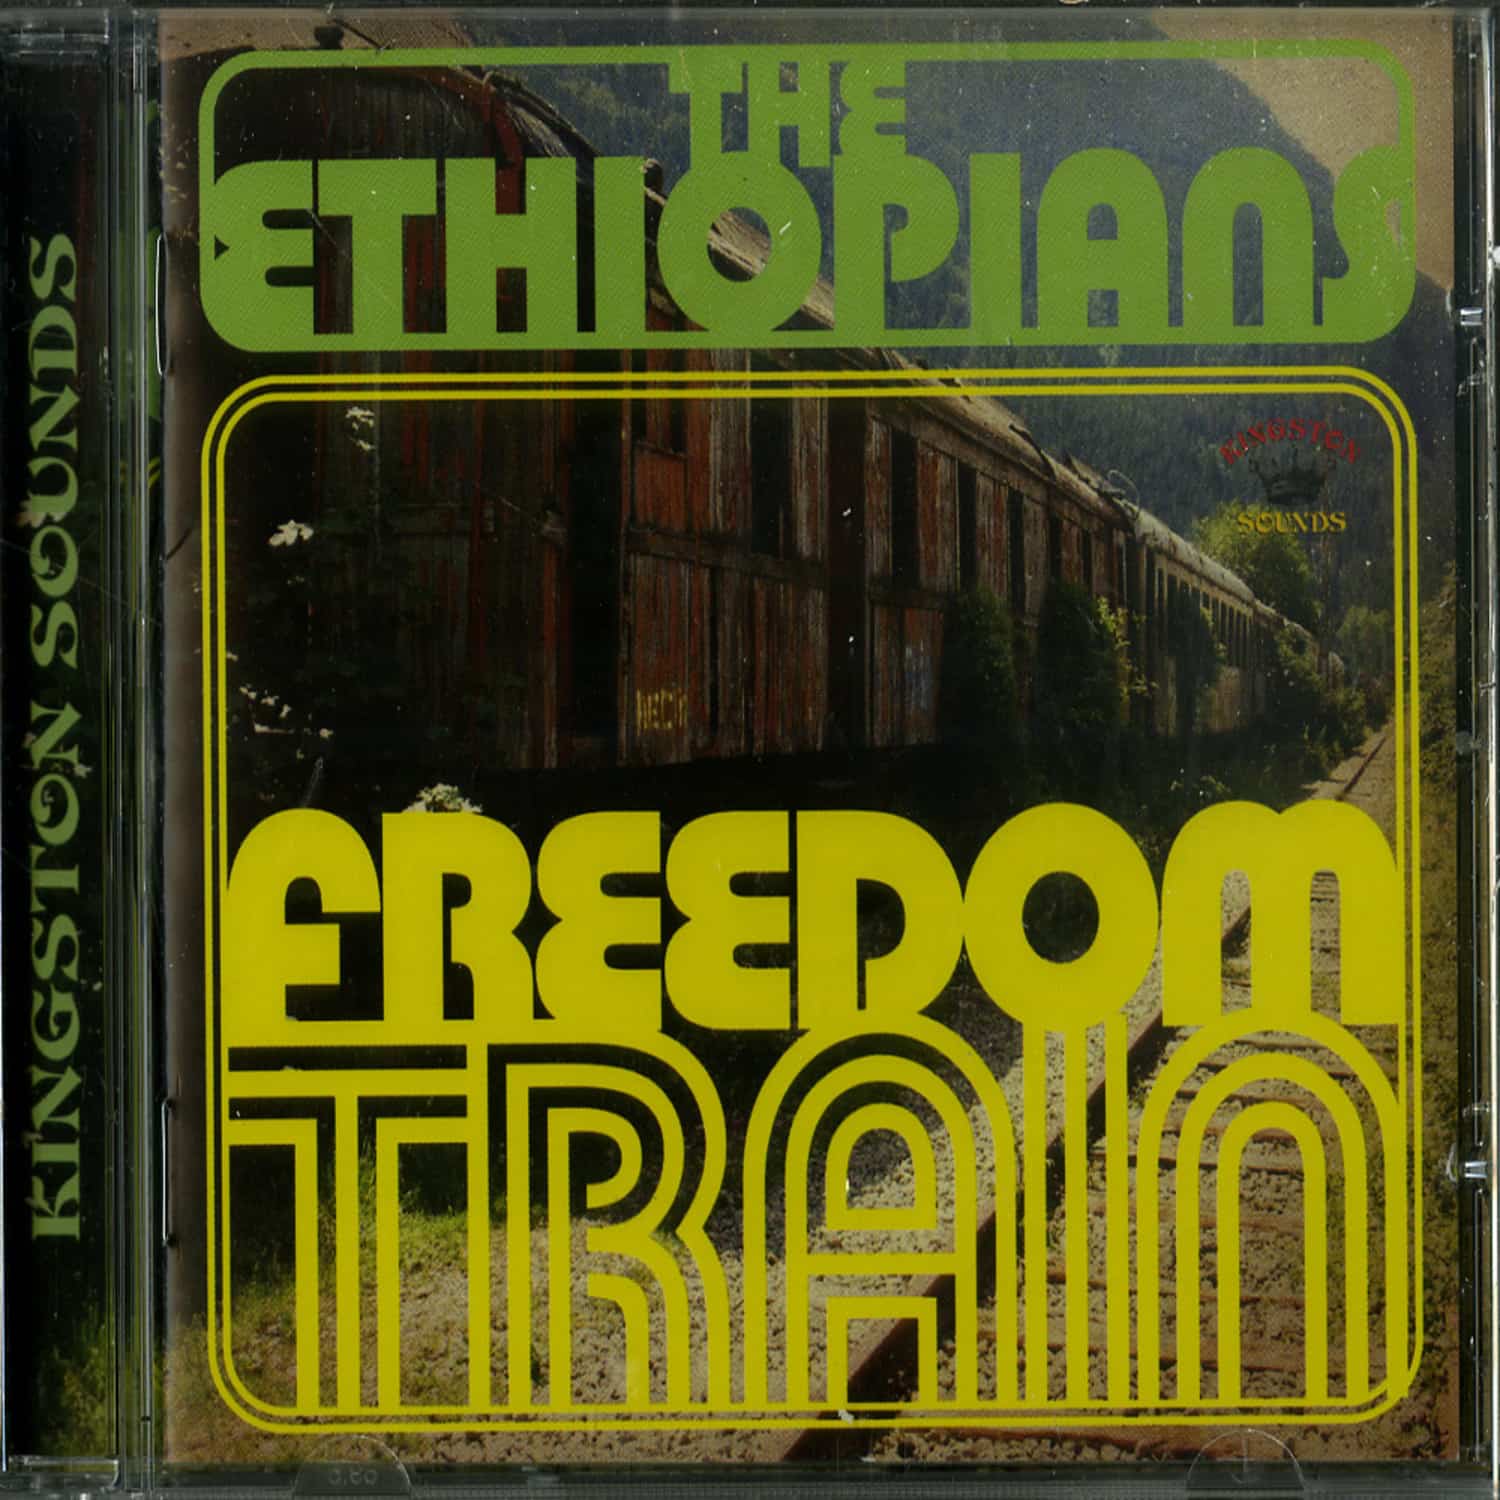 The Ethiopians - FREEDOM TRAIN 